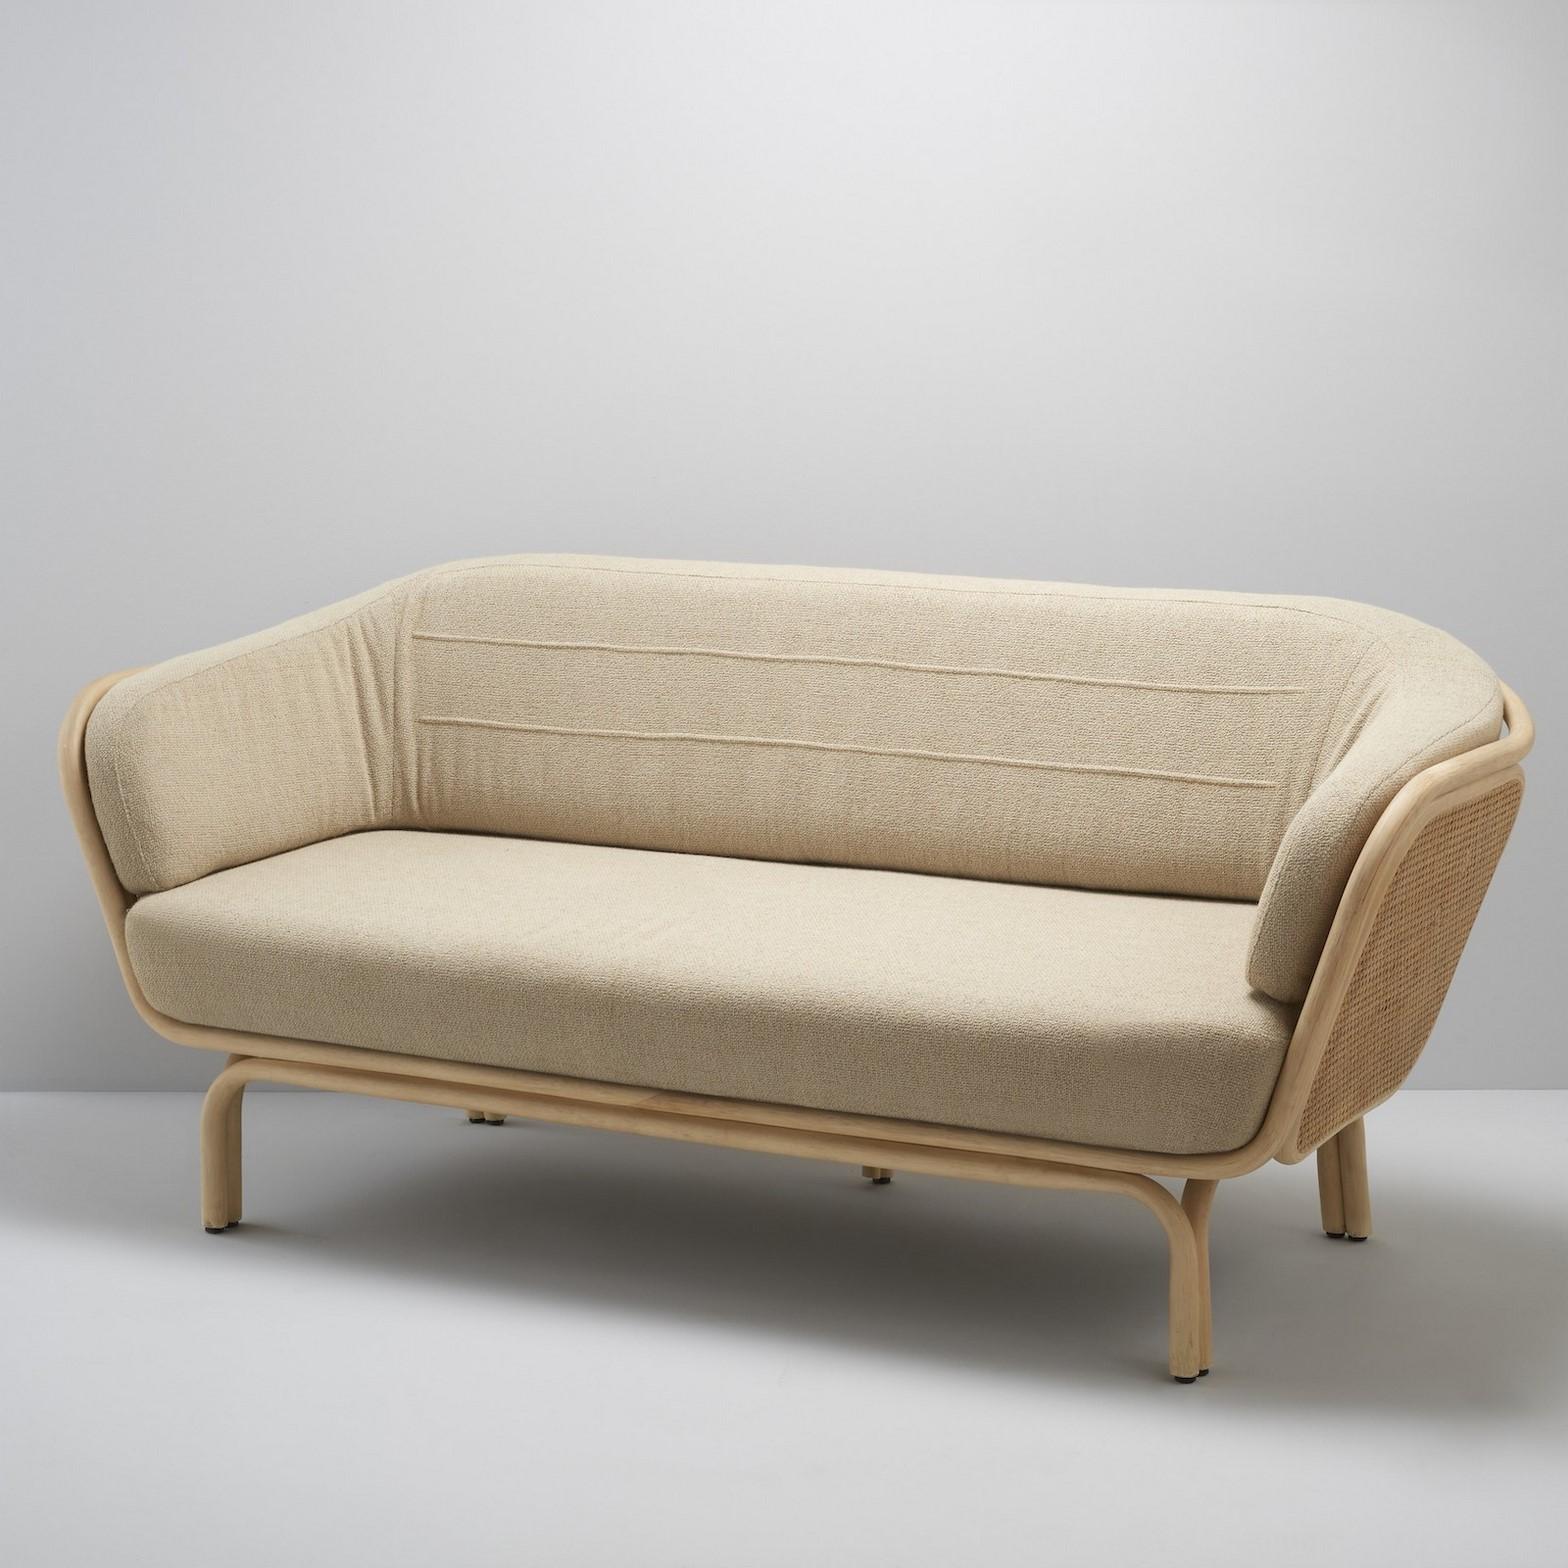 Contemporary French Design Rattan and Cane Sofa